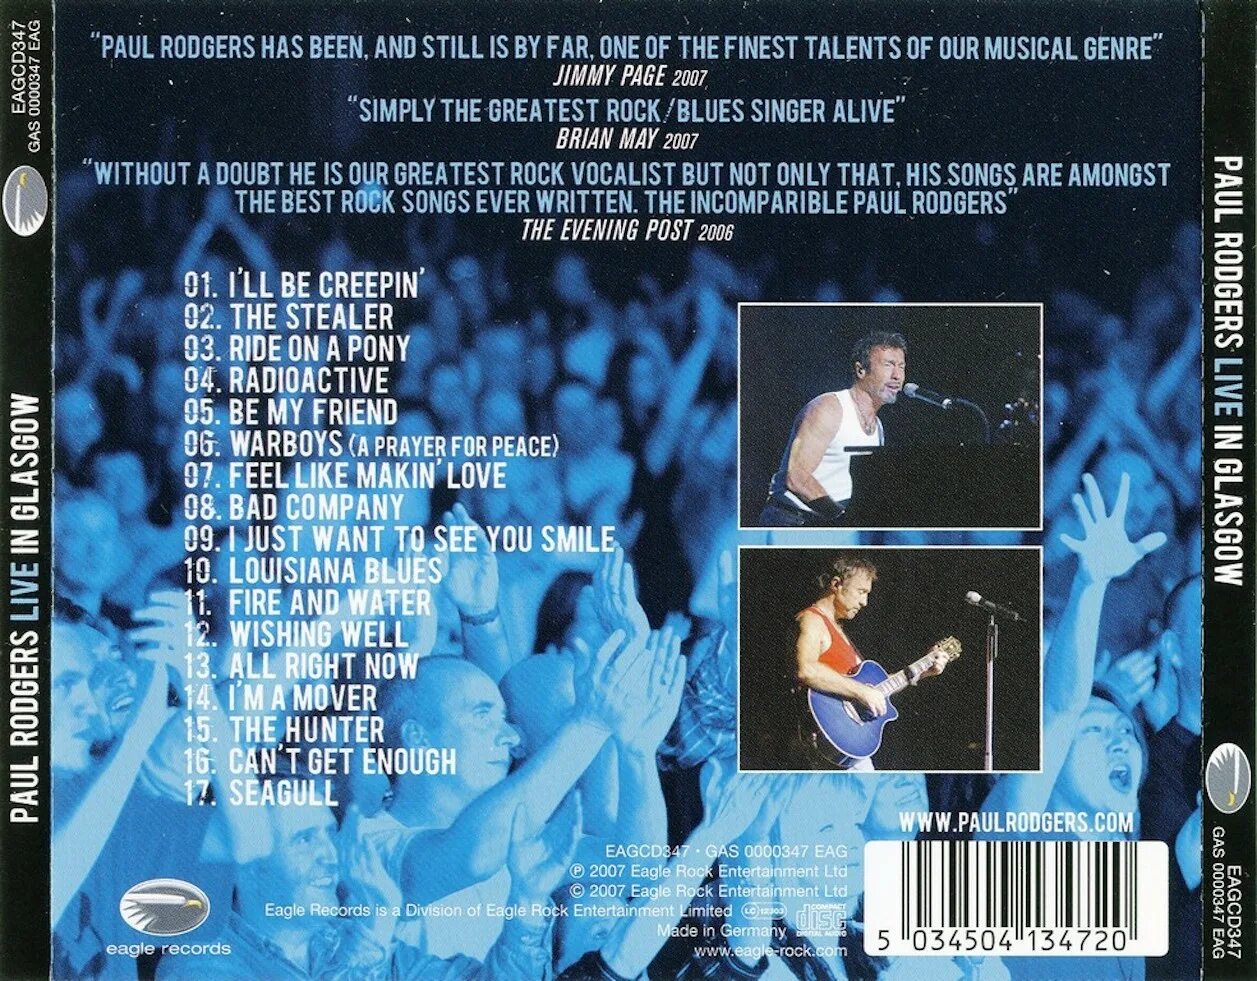 Обложка к диску Paul Rodgers - Live in Glasgow. Пол Роджерс обложки альбомов. Paul Rodgers обложки альбома. Paul Rodgers Live in Glasgow.